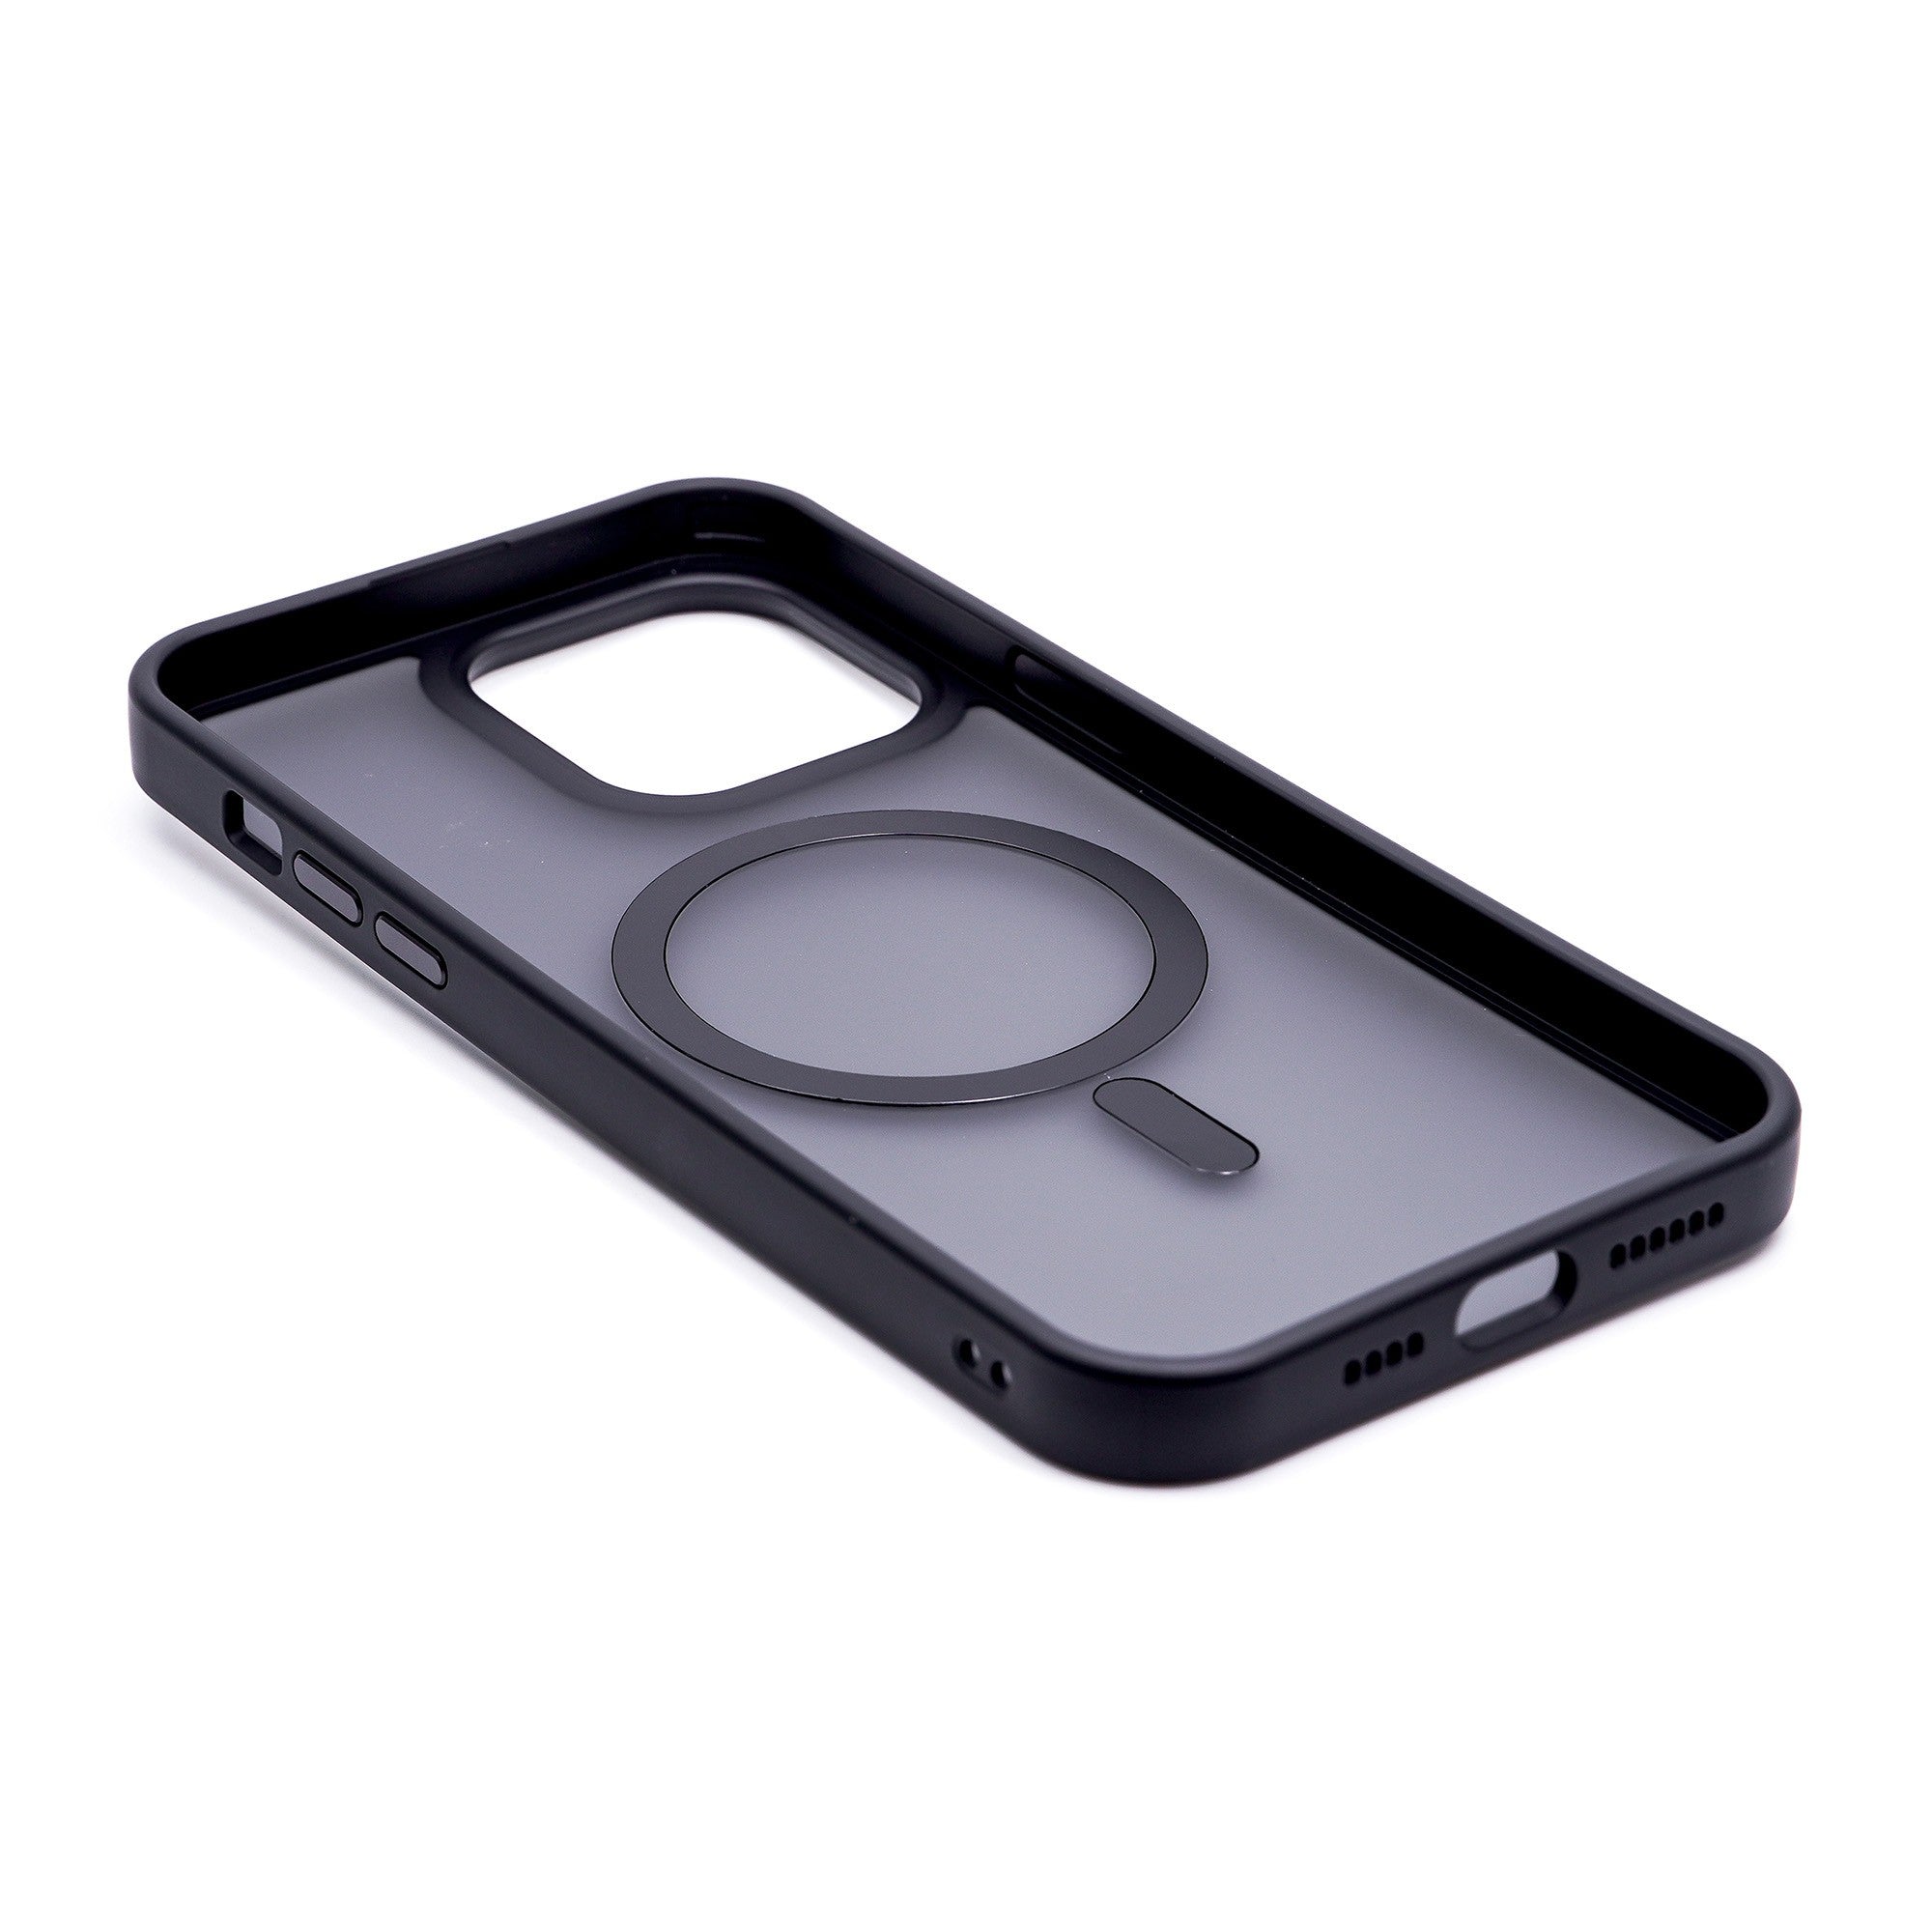 iPhone 14 Plus SPECTRUM Halo Slim MagSafe Case  - Smoke - 15-10554